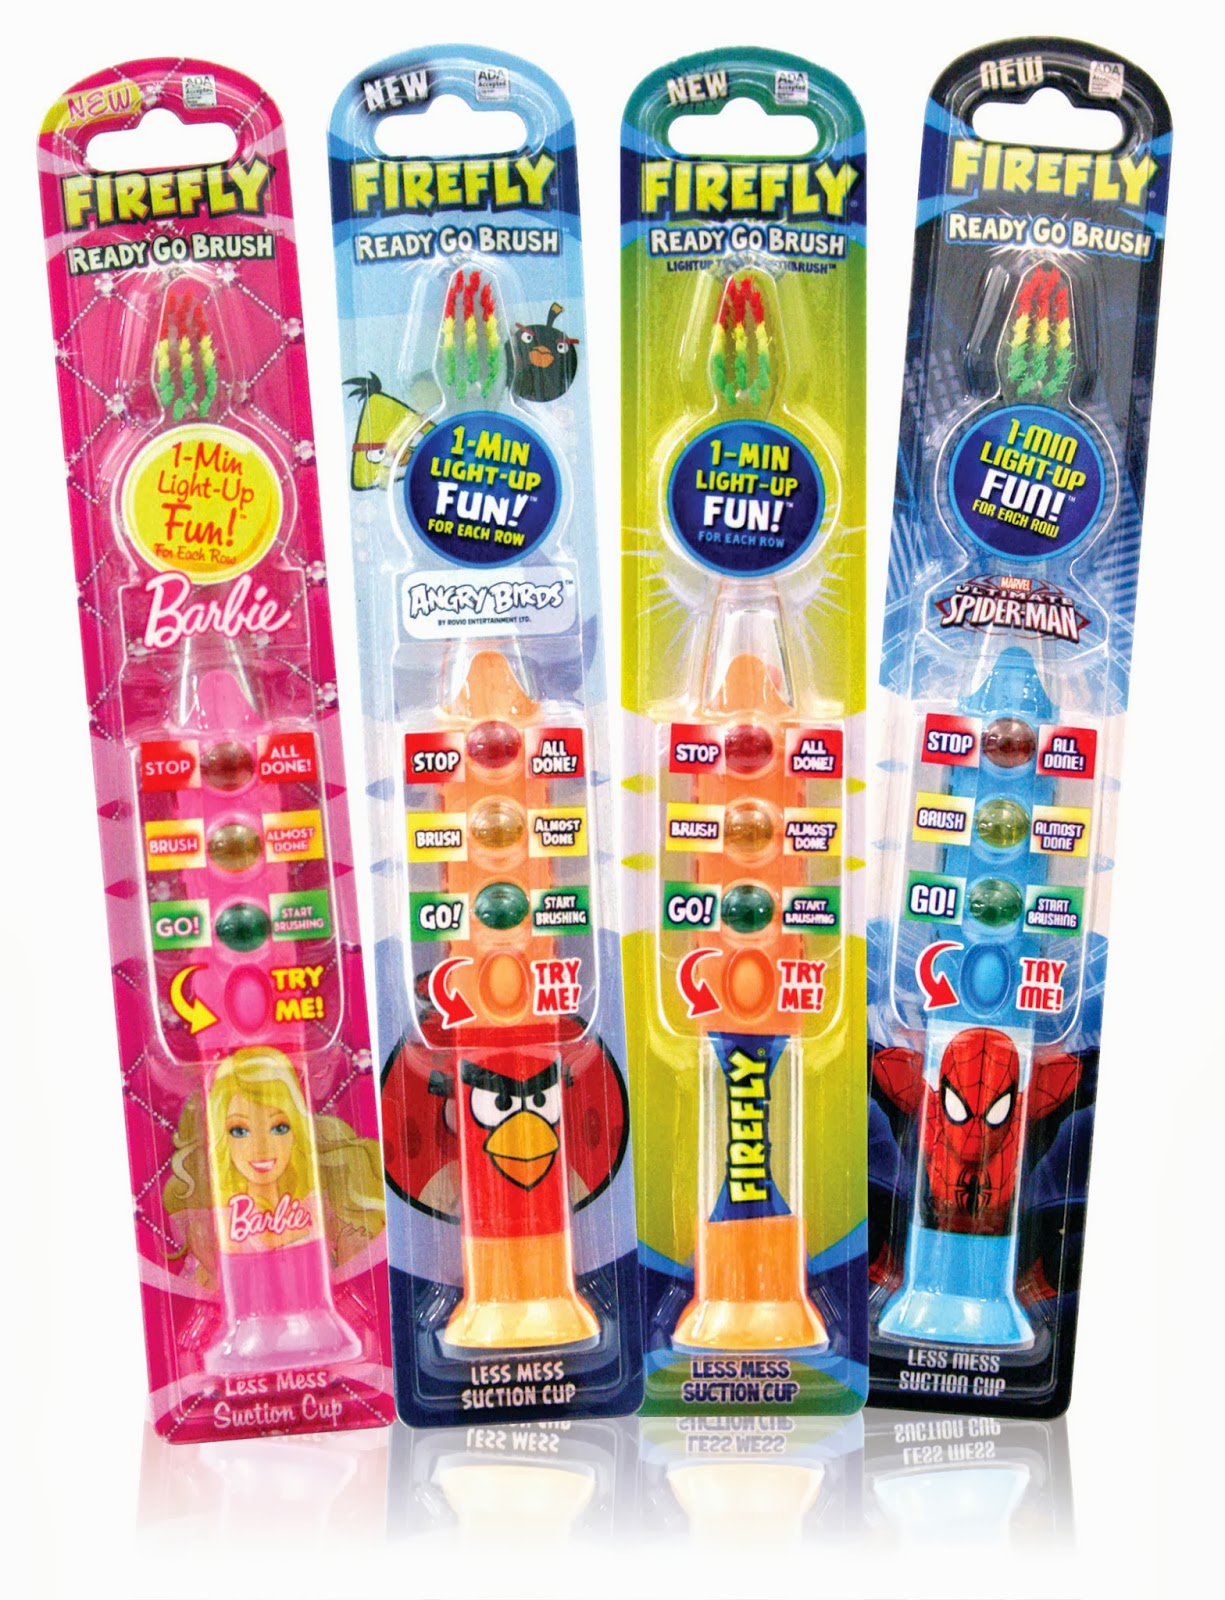 FireFly Ready Go Brush Toothbrush Will Have Your Kid Rushing to Brush ...